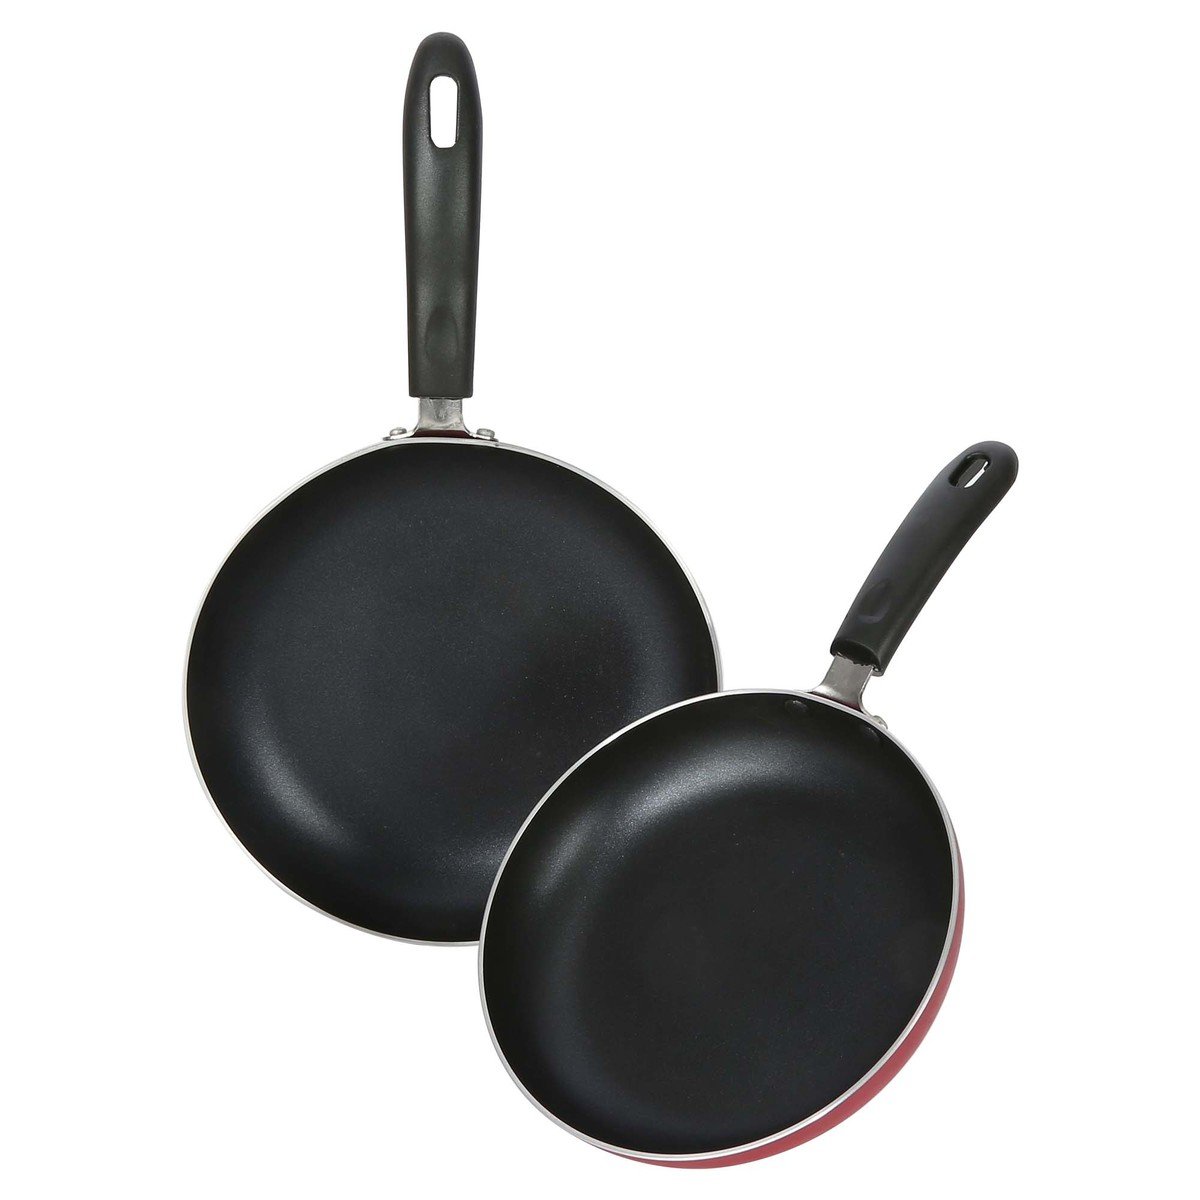 Chefline Aluminium Non Stick Fry Pan Set, 2 pcs, 20 cm + 24 cm